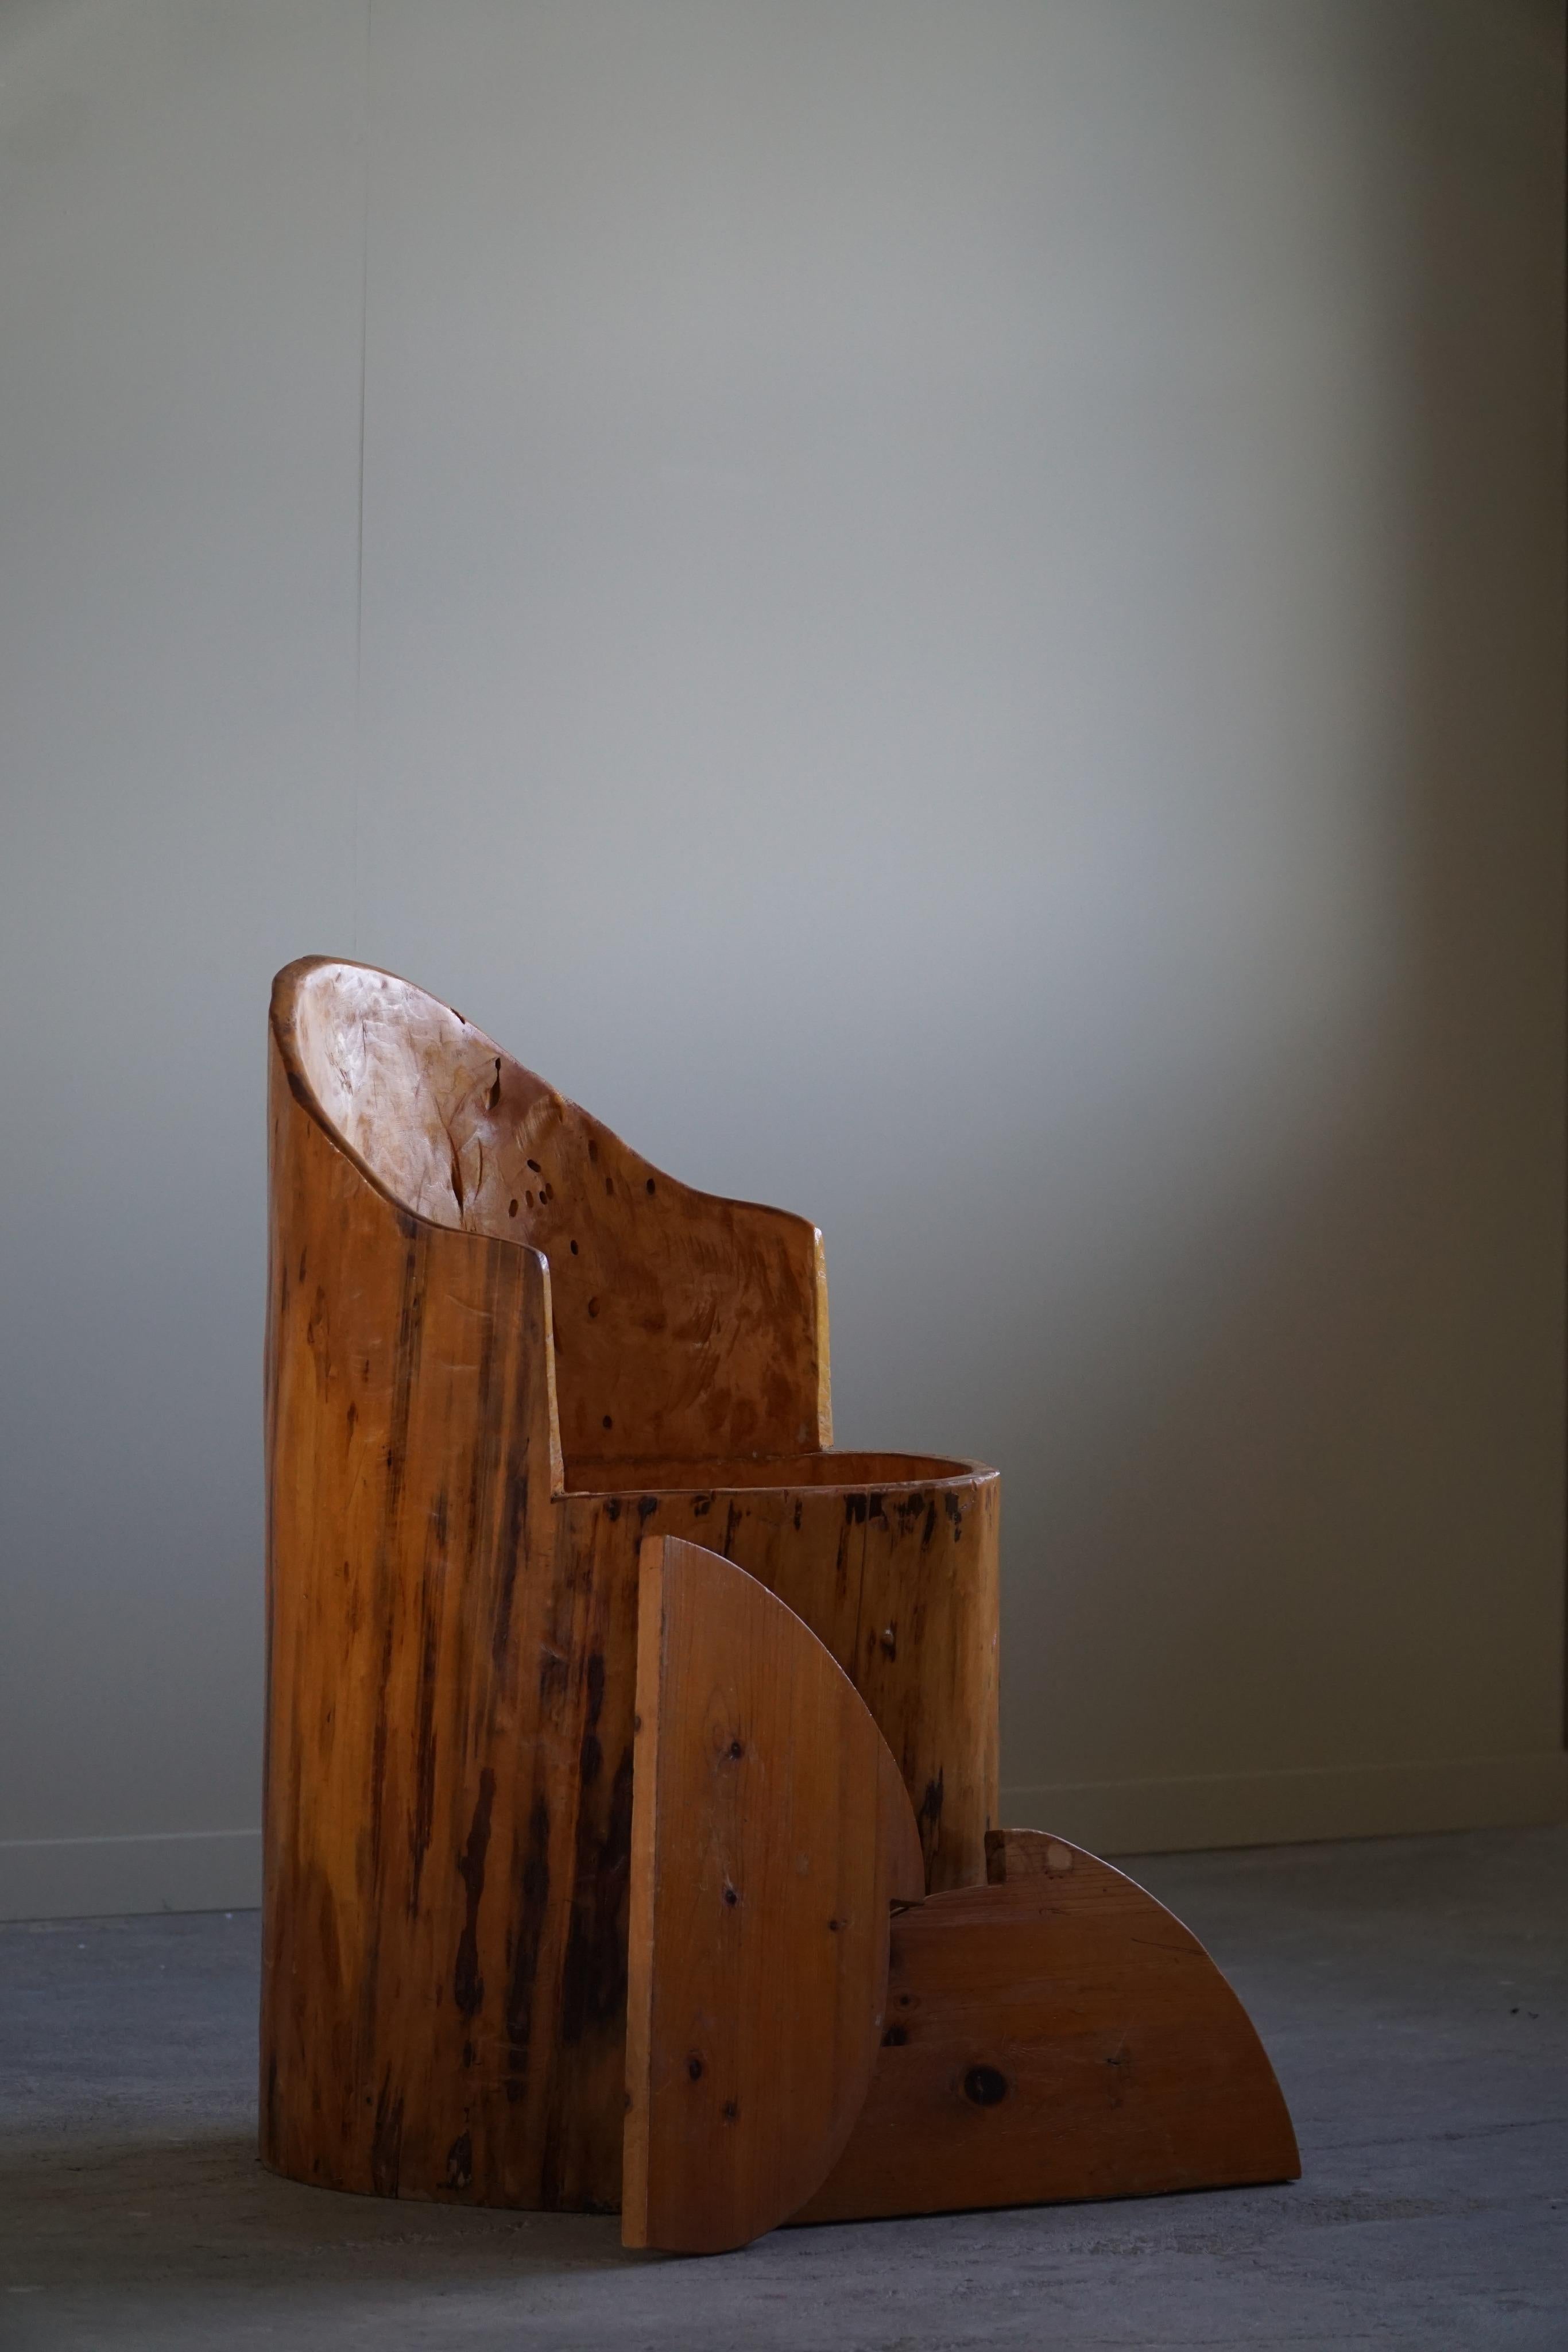 20th Century Primitive Stump Chair in Pine, Hand Carved, Swedish Modern, Wabi Sabi, 1960s For Sale